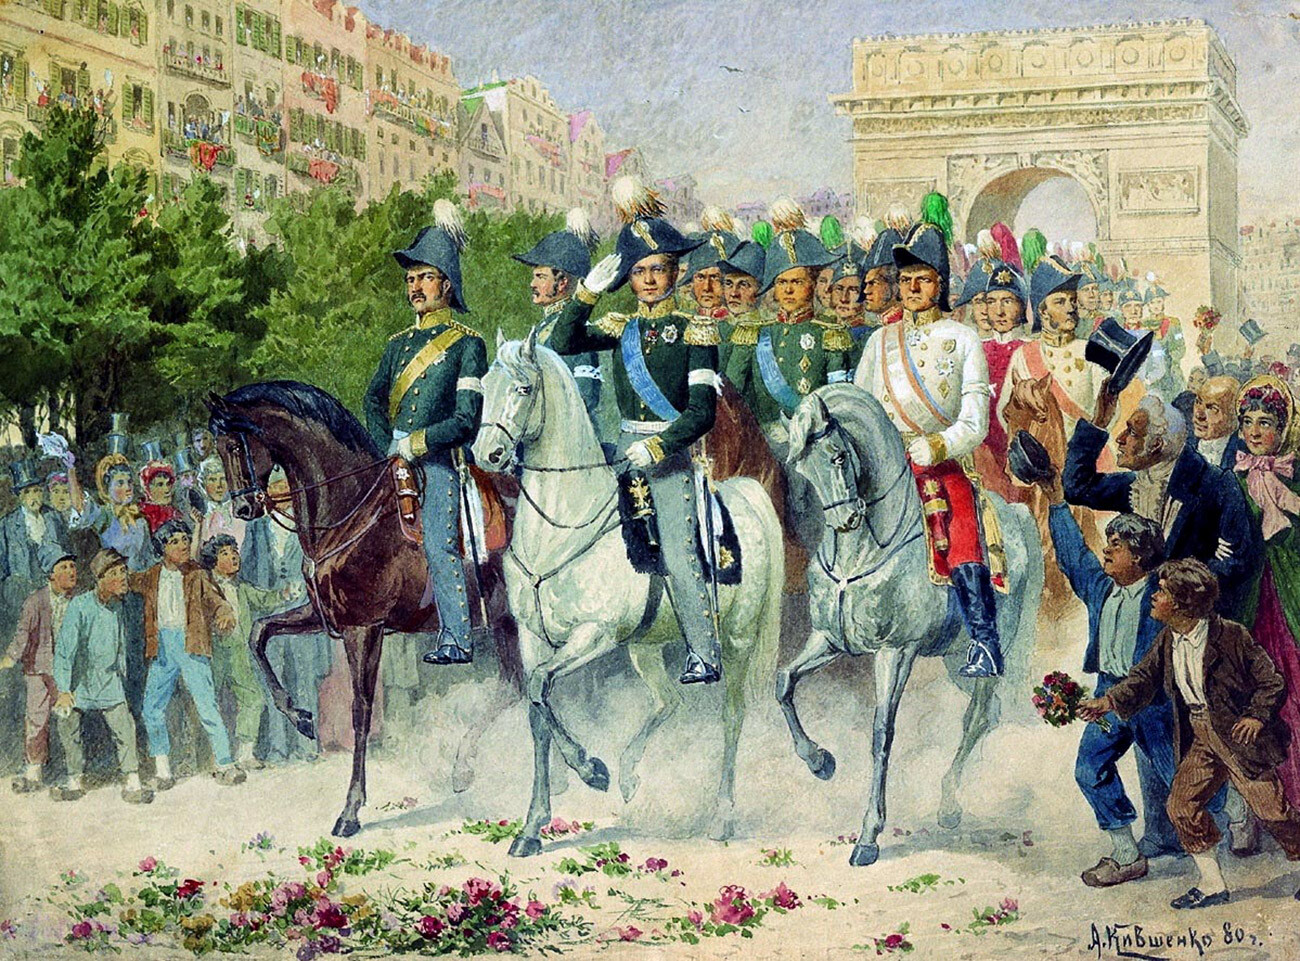 Russian troops enter Paris in 1814.